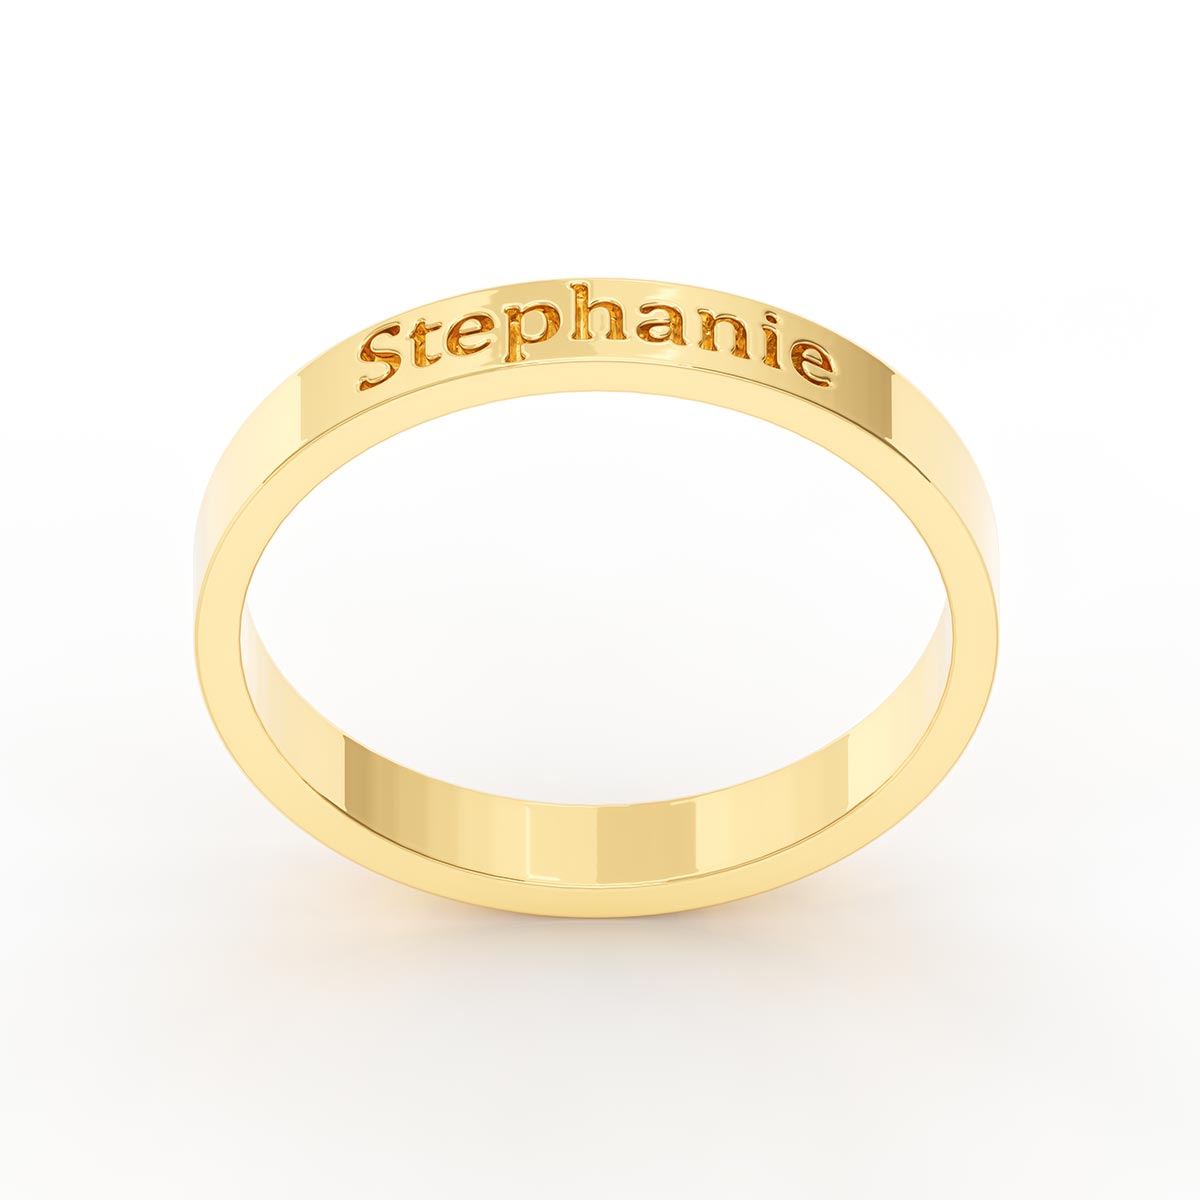 Plain Ring With Name Engraving